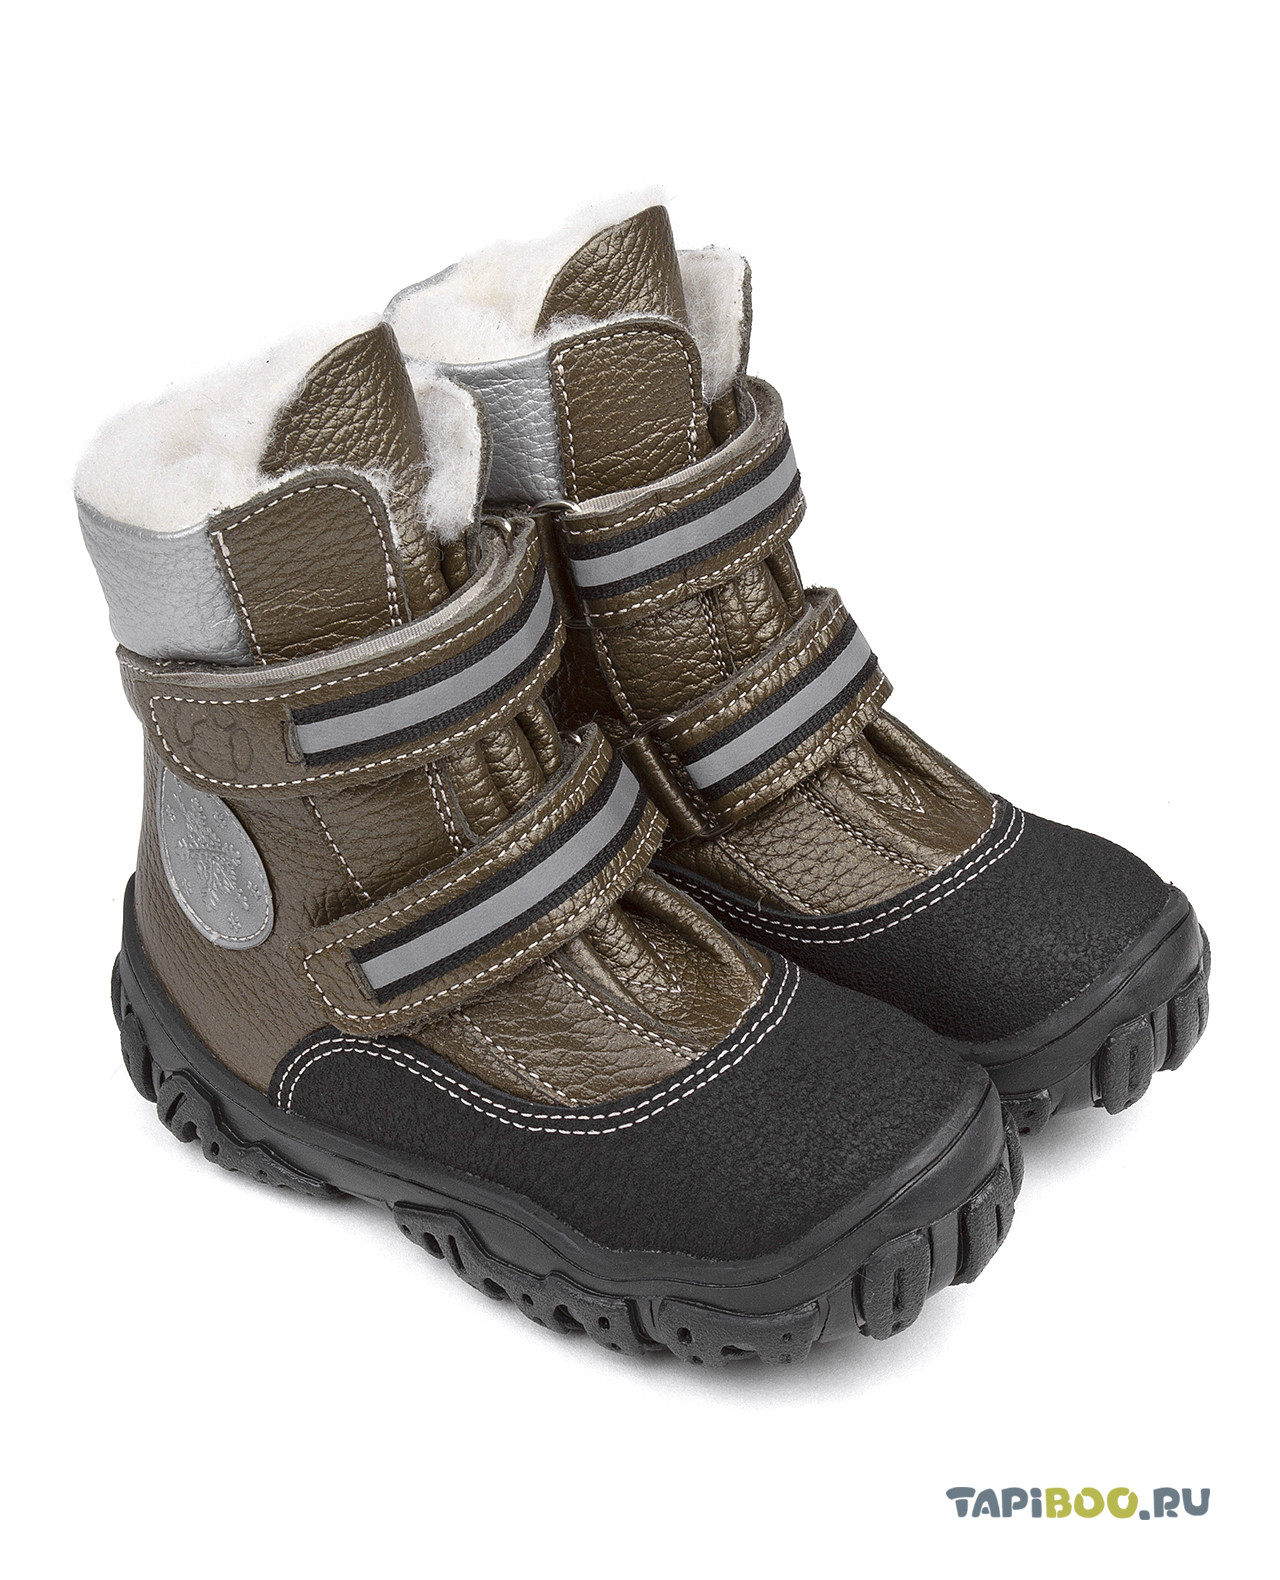 Ботинки детские Tapiboo, ТОКИО (77519, 25) ботинки детские tapiboo фуксия радуга 76488 25